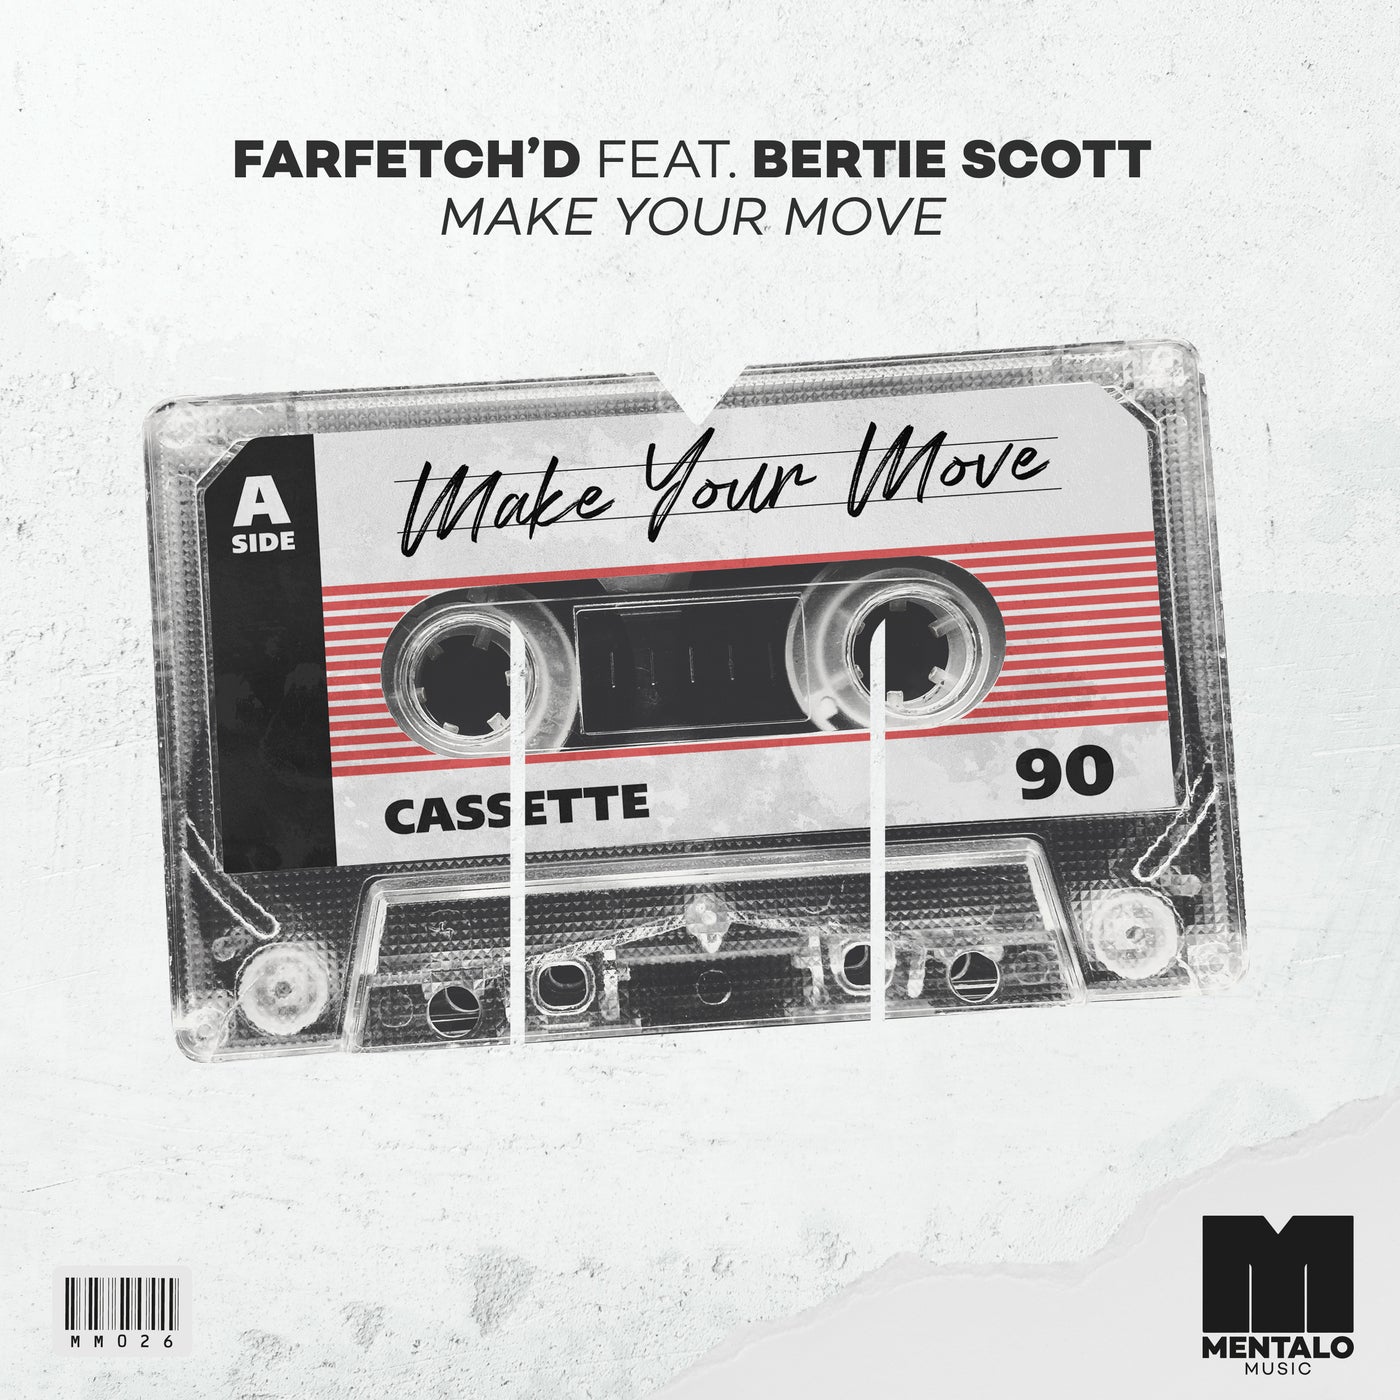 Farfetch'd feat. Bertie Scott - Make Your Move (Extended Mix)